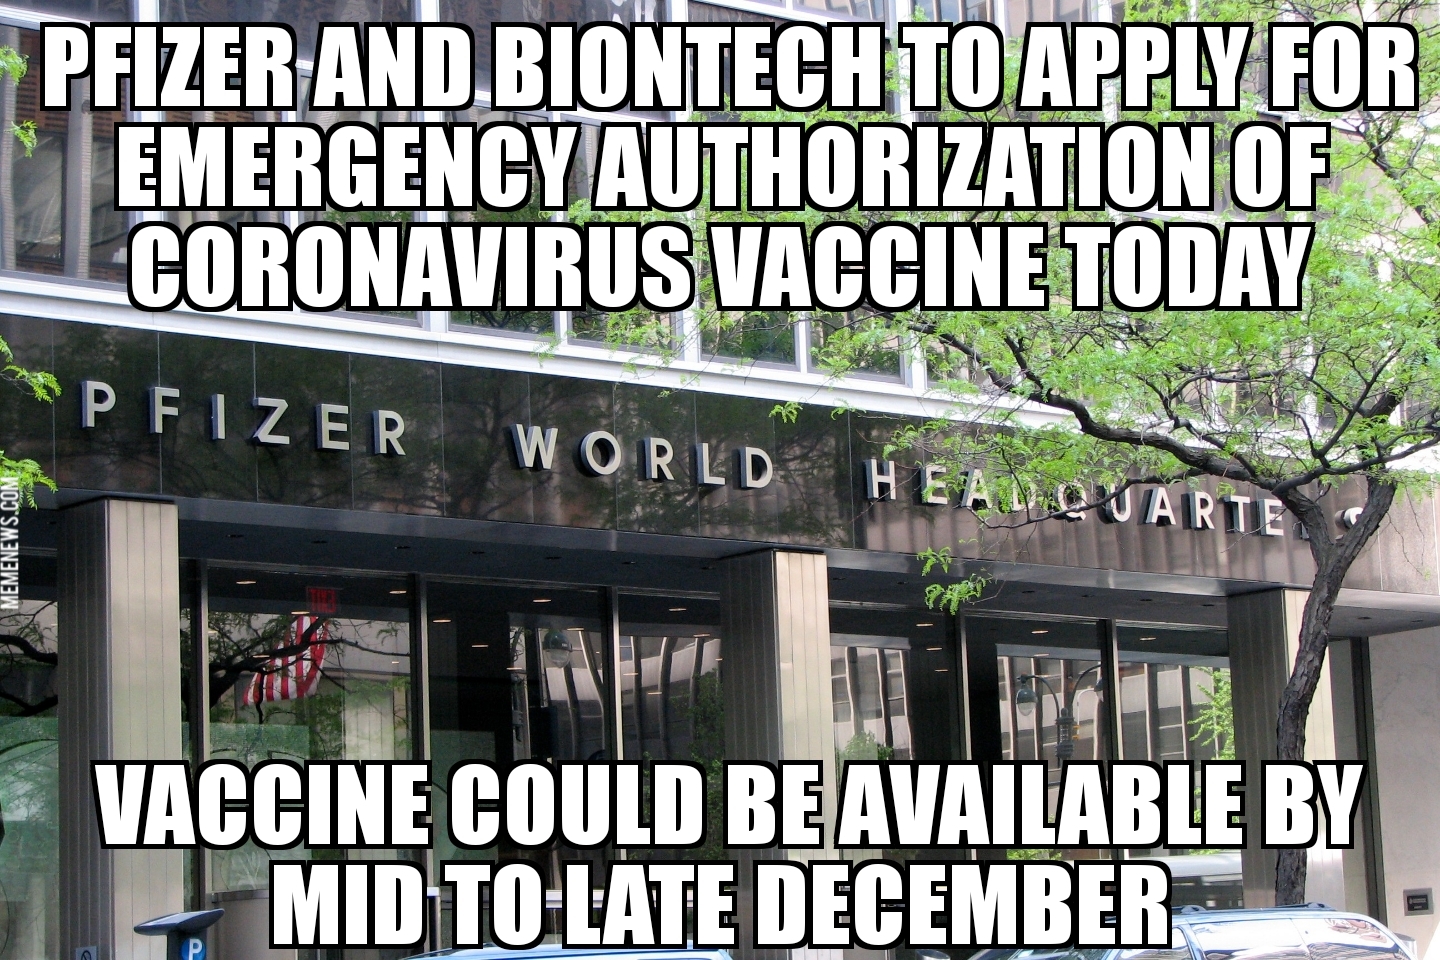 Pfizer and BioNTech apply for emergency authorization of coronavirus vaccine